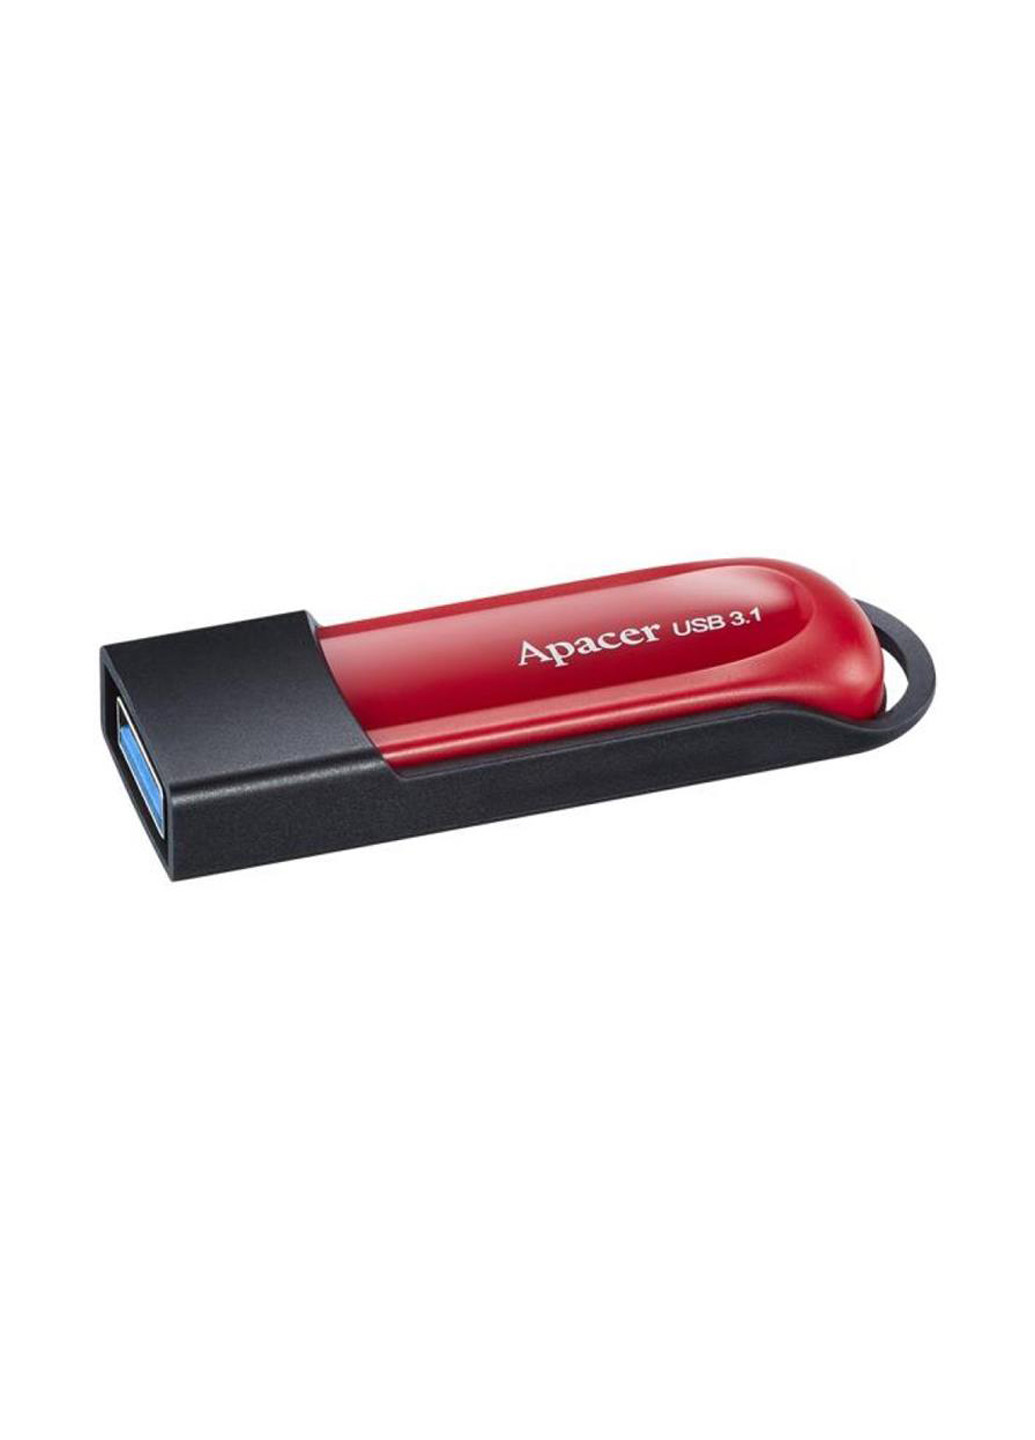 Флеш память USB AH25A 32GB USB 3.1 Red/Black (AP32GAH25AB-1) Apacer флеш память usb apacer ah25a 32gb usb 3.1 red/black (ap32gah25ab-1) (135165442)